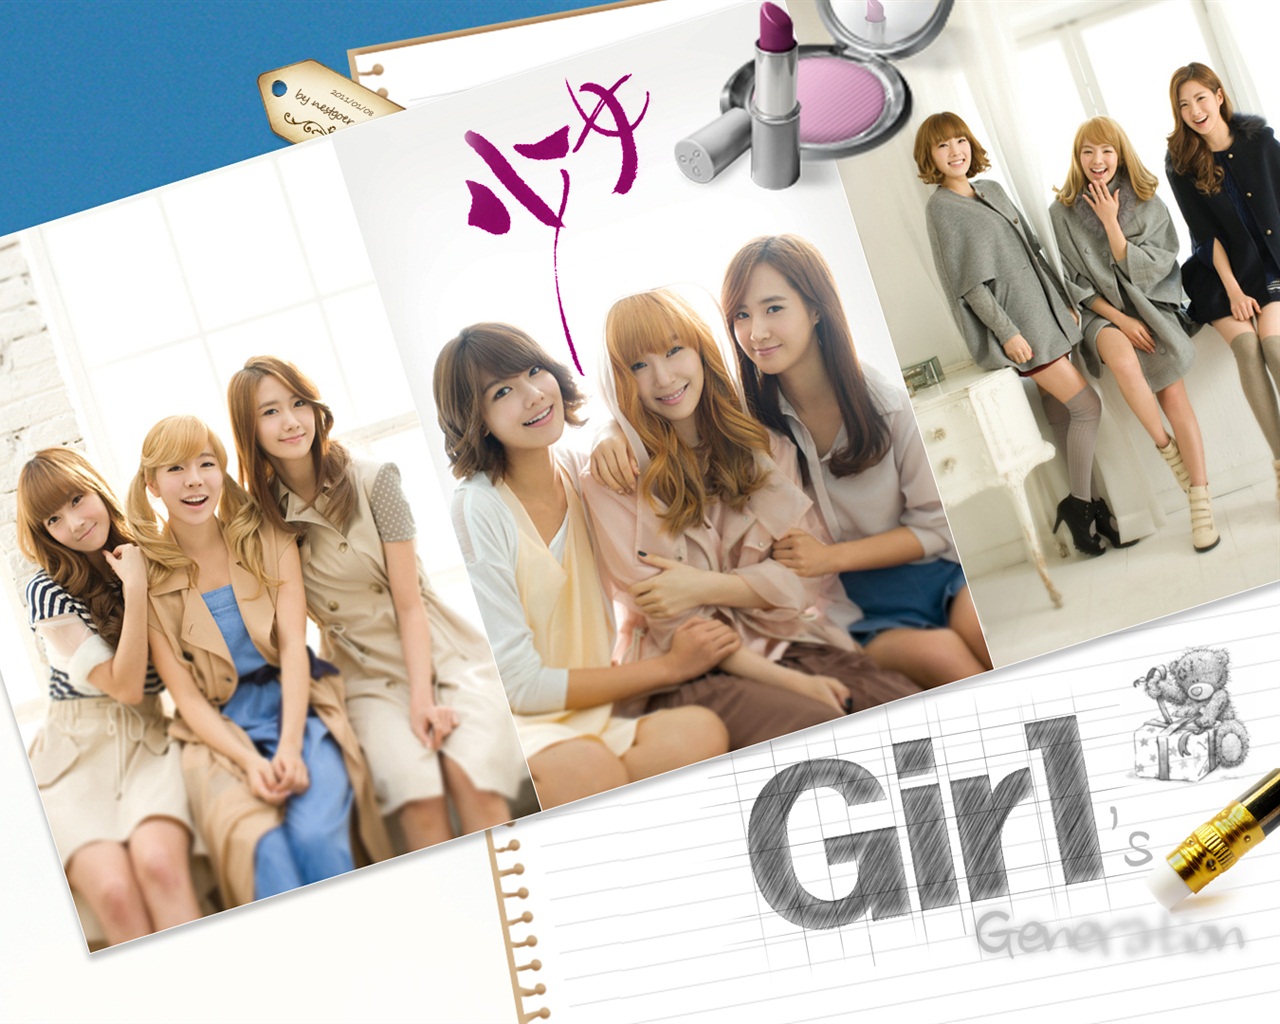 Generación último Girls HD Wallpapers Collection #11 - 1280x1024